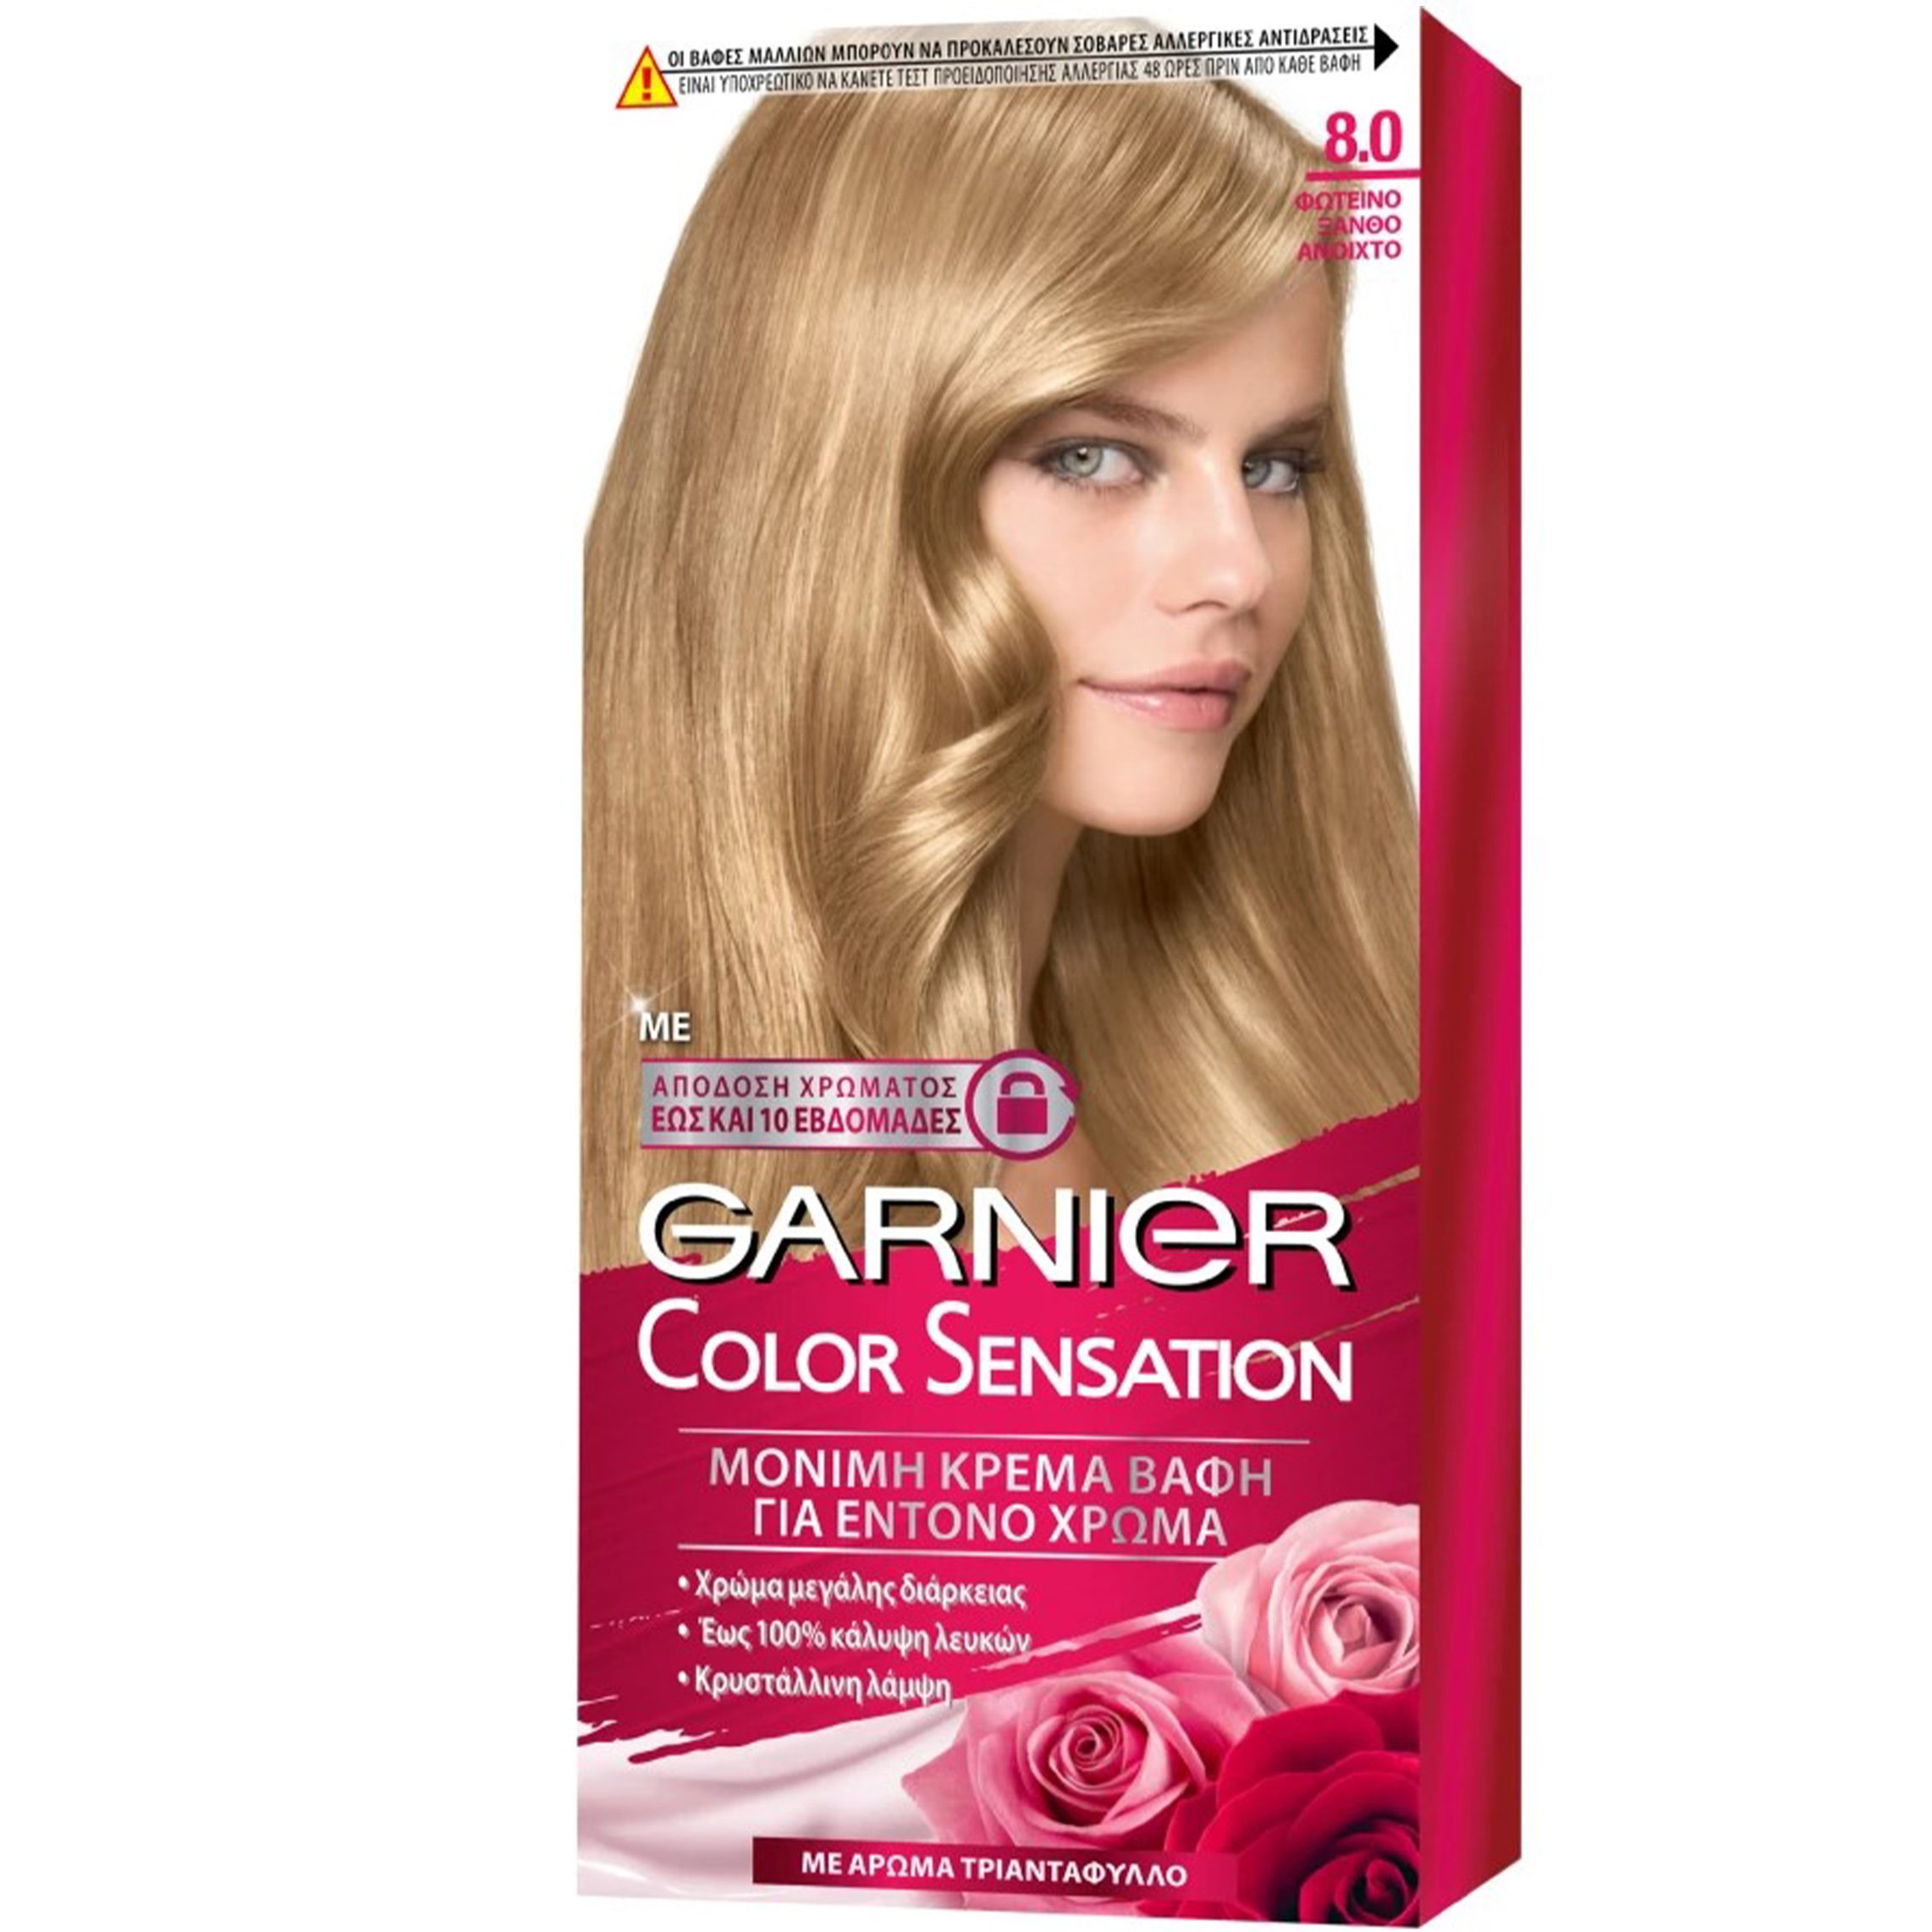 Garnier Color Sensation Permanent Hair Color Kit Μόνιμη Κρέμα Βαφή Μαλλιών με Άρωμα Τριαντάφυλλο 1 Τεμάχιο – 8.0 Φωτεινό Ξανθό Ανοιχτό